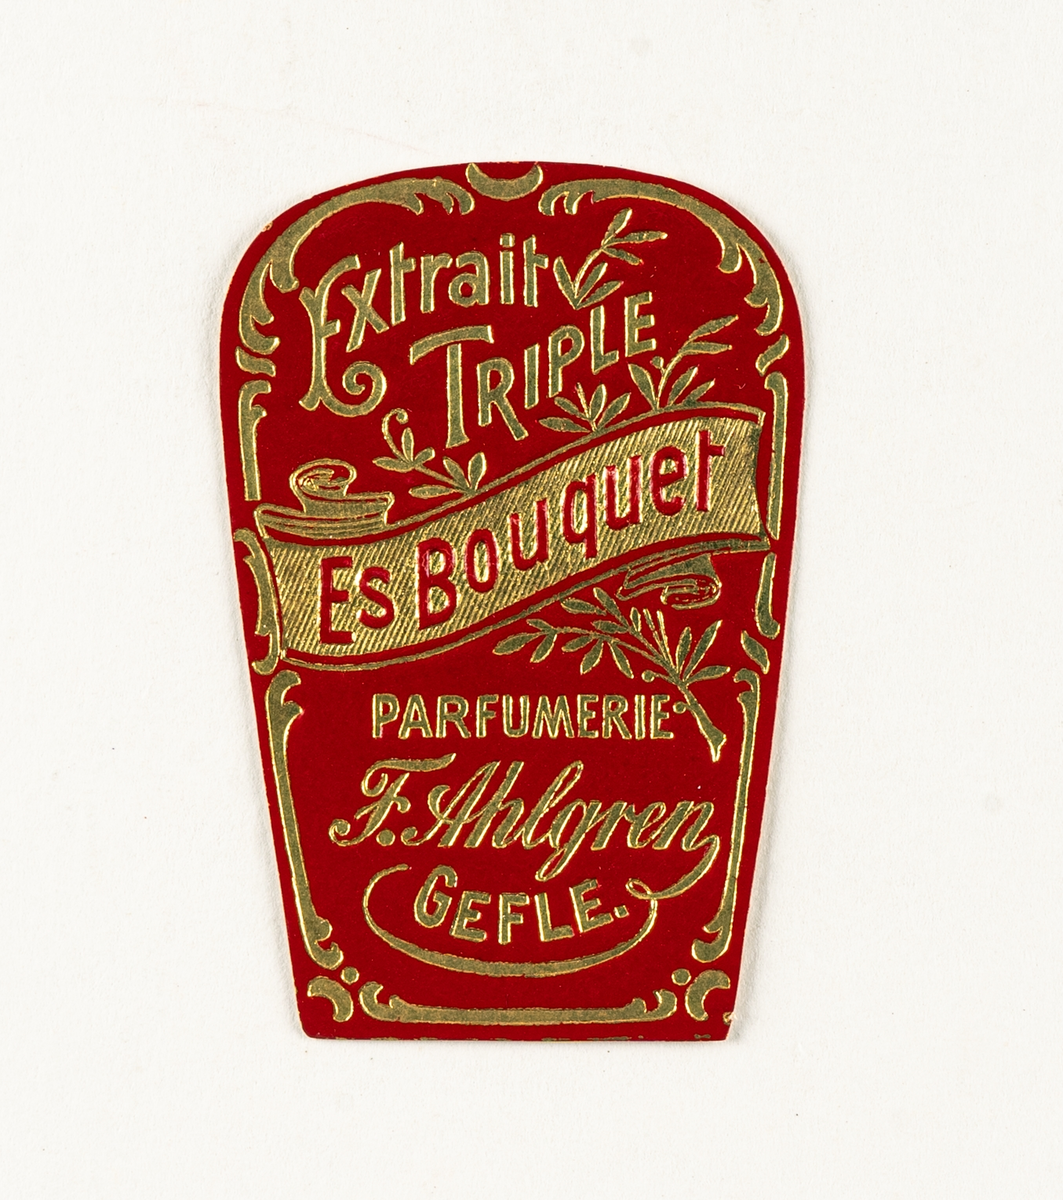 Etikett i papper med blomsterdekor i guld på röd botten med titeln Extrait Triple Es Bouquet Parfumerie F. Ahlgren Gefle.